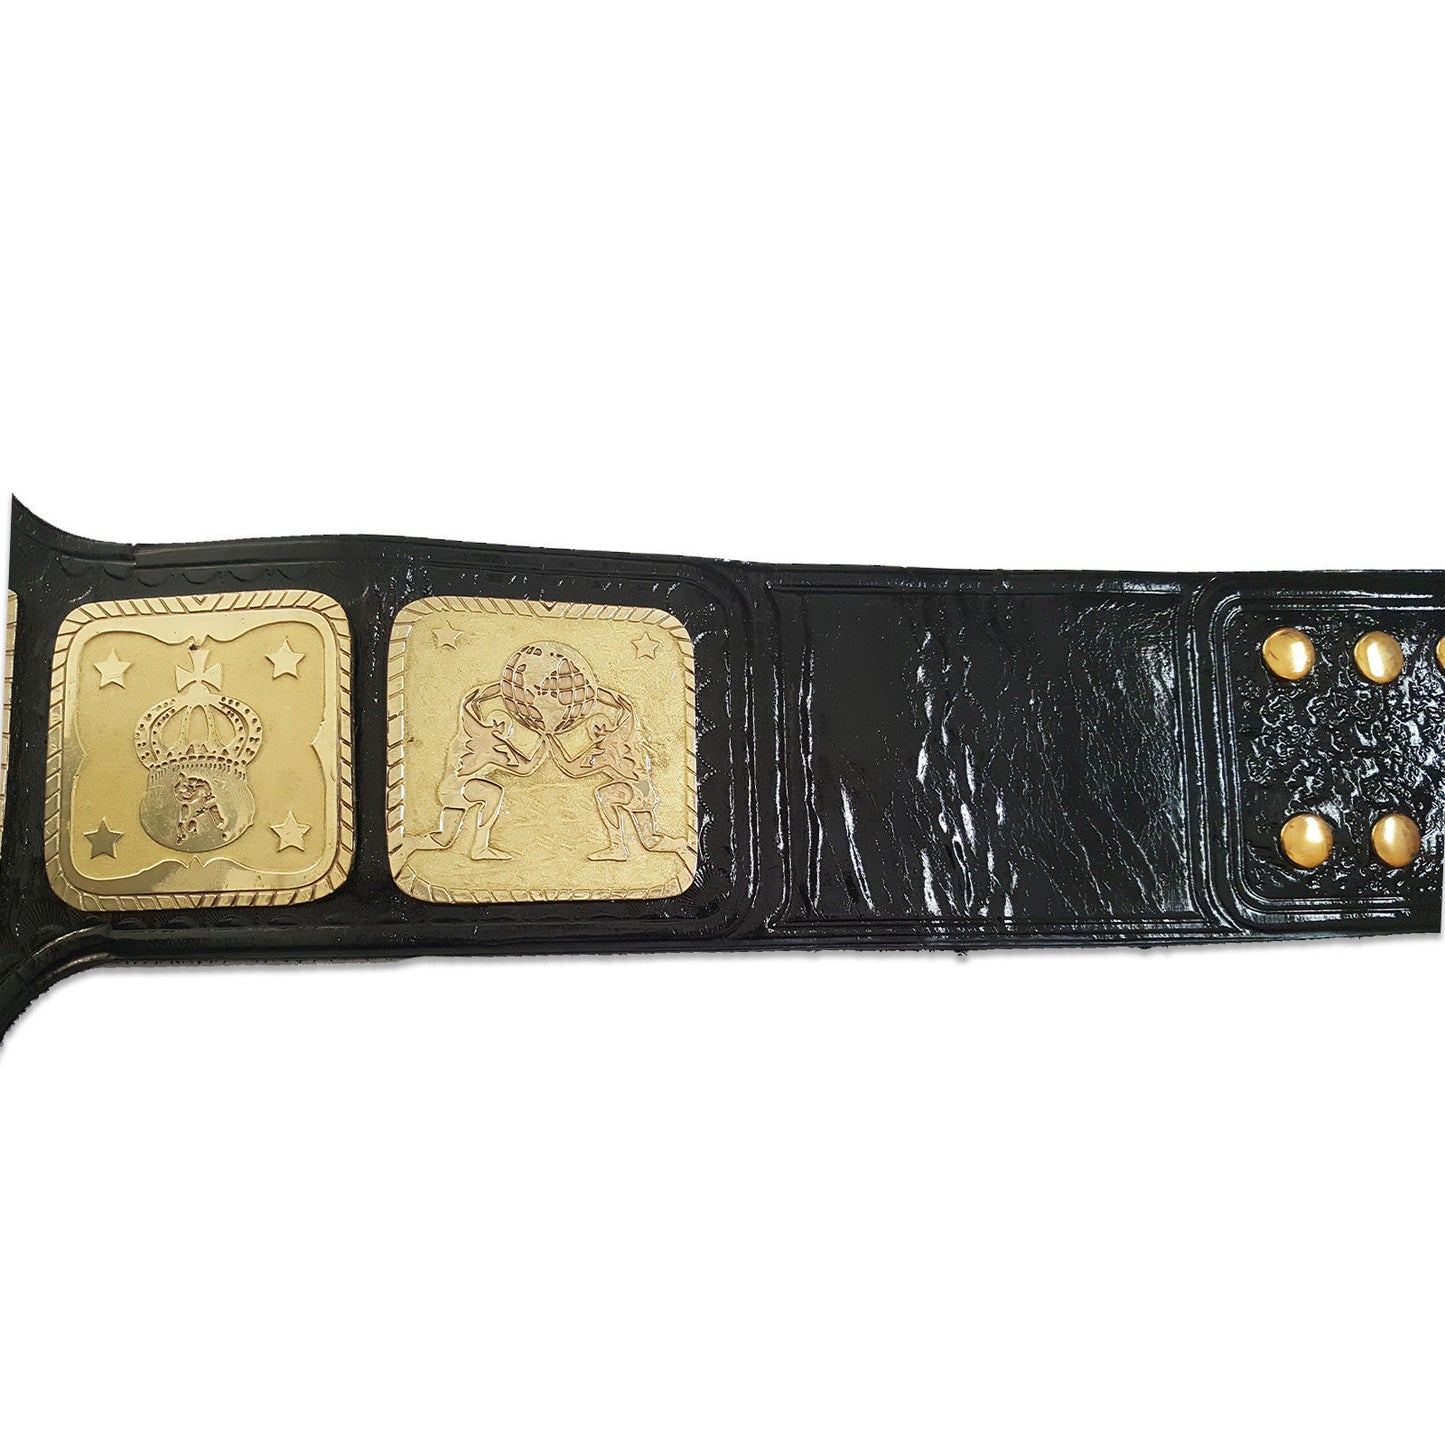 AWA World Tag Team Wrestling Championship Title Belt